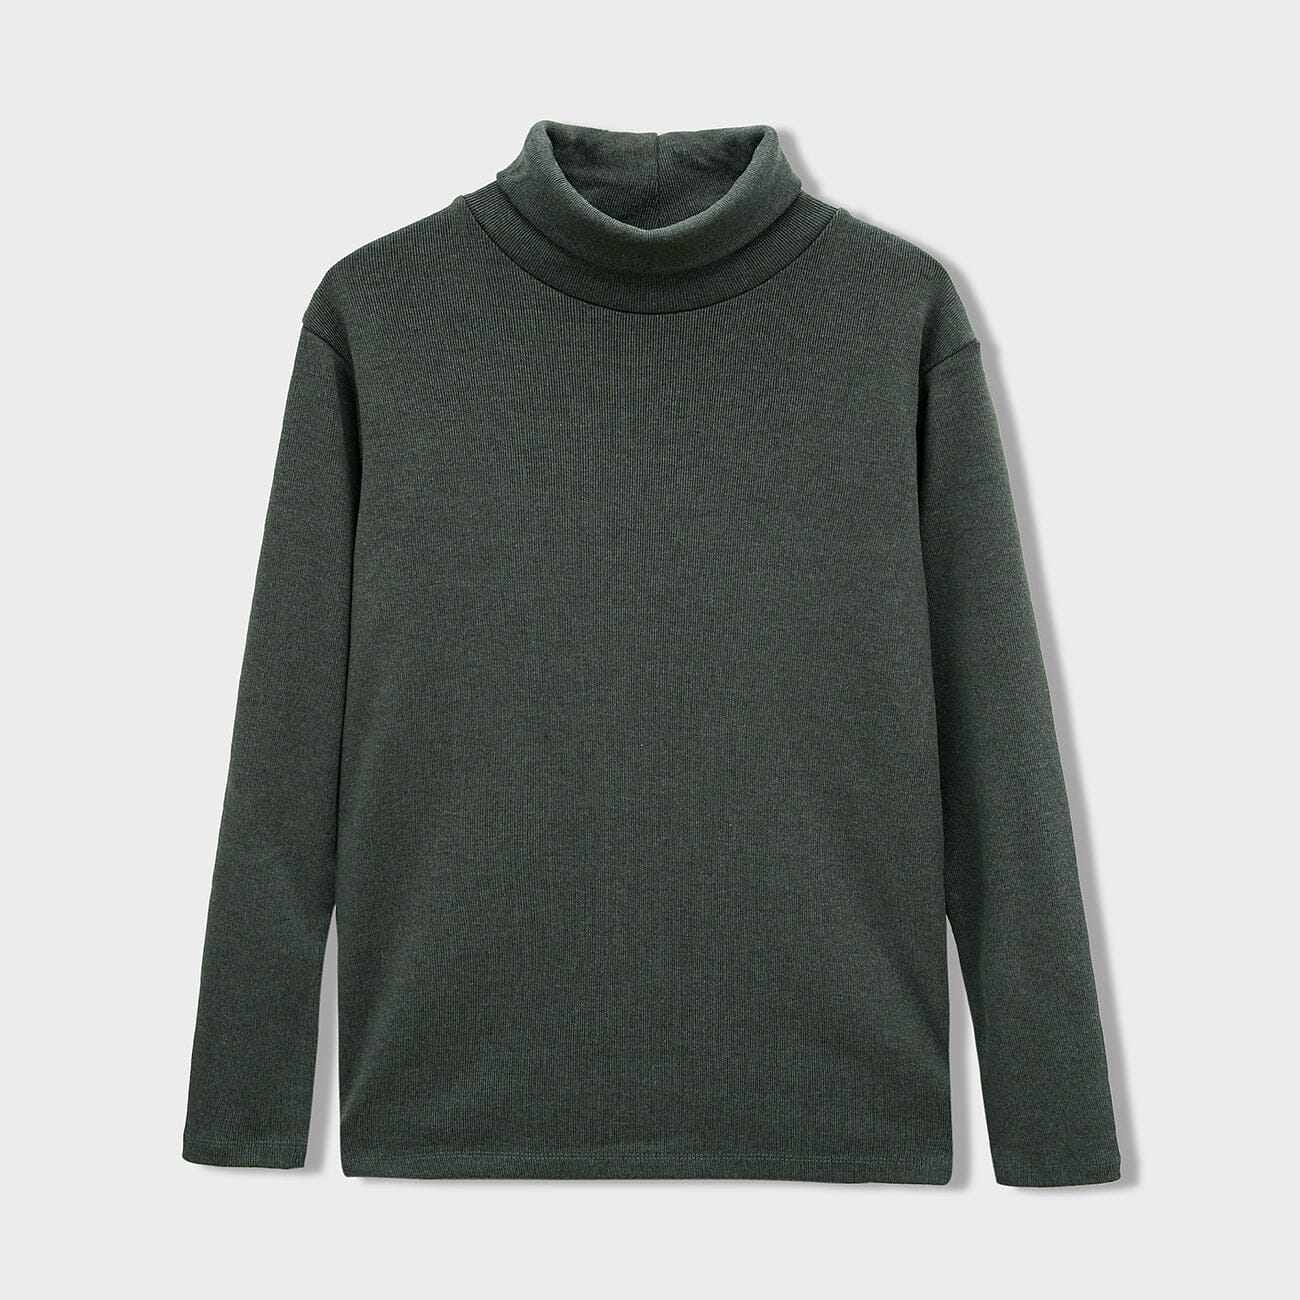 Premium Quality Olive Turtle Neck Sweatshirt For Men (120161)